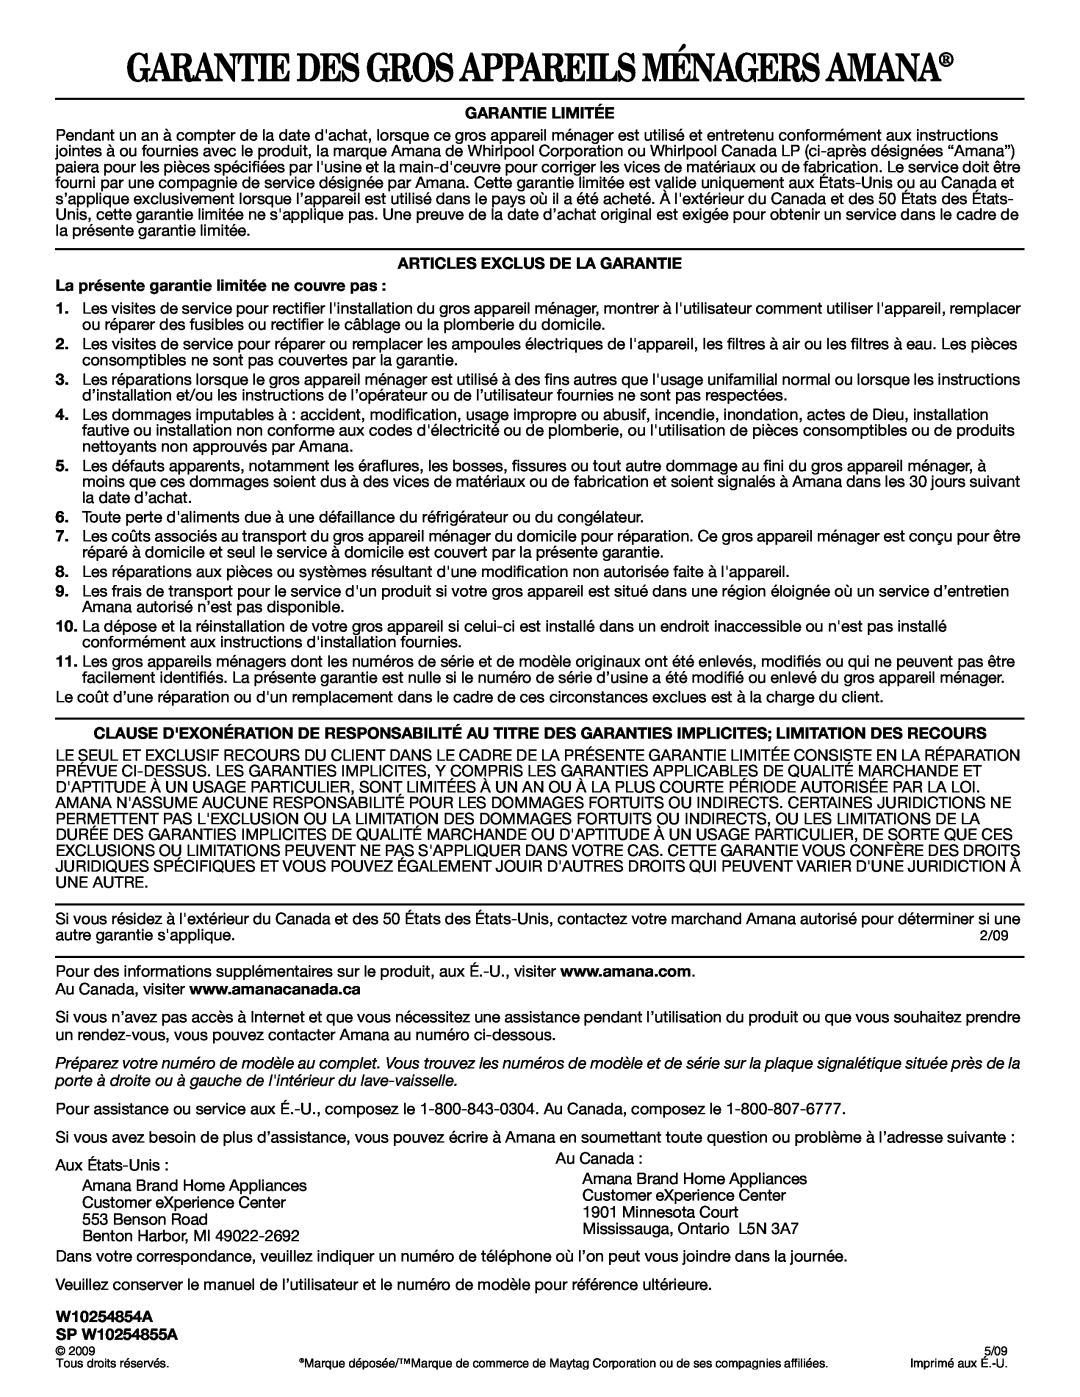 Amana W10254854A warranty Garantie Des Gros Appareils Ménagers Amana, Garantie Limitée, Articles Exclus De La Garantie 